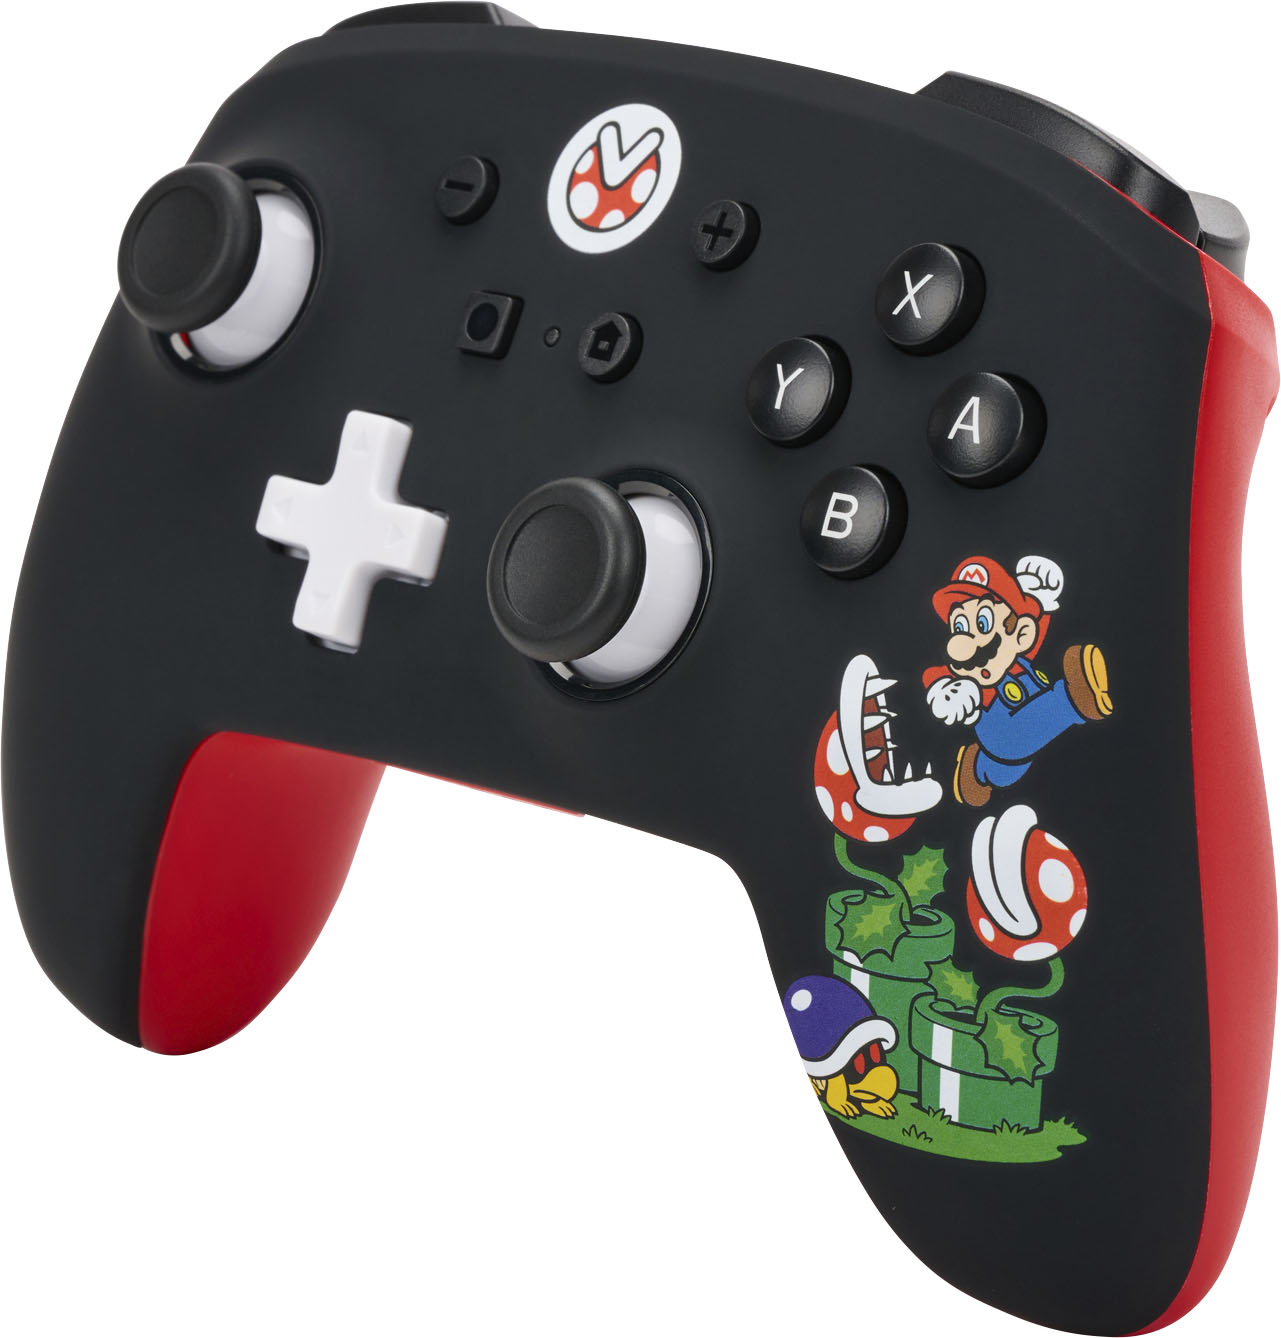 PowerA Enhanced Wireless Controller for Nintendo  - Best Buy